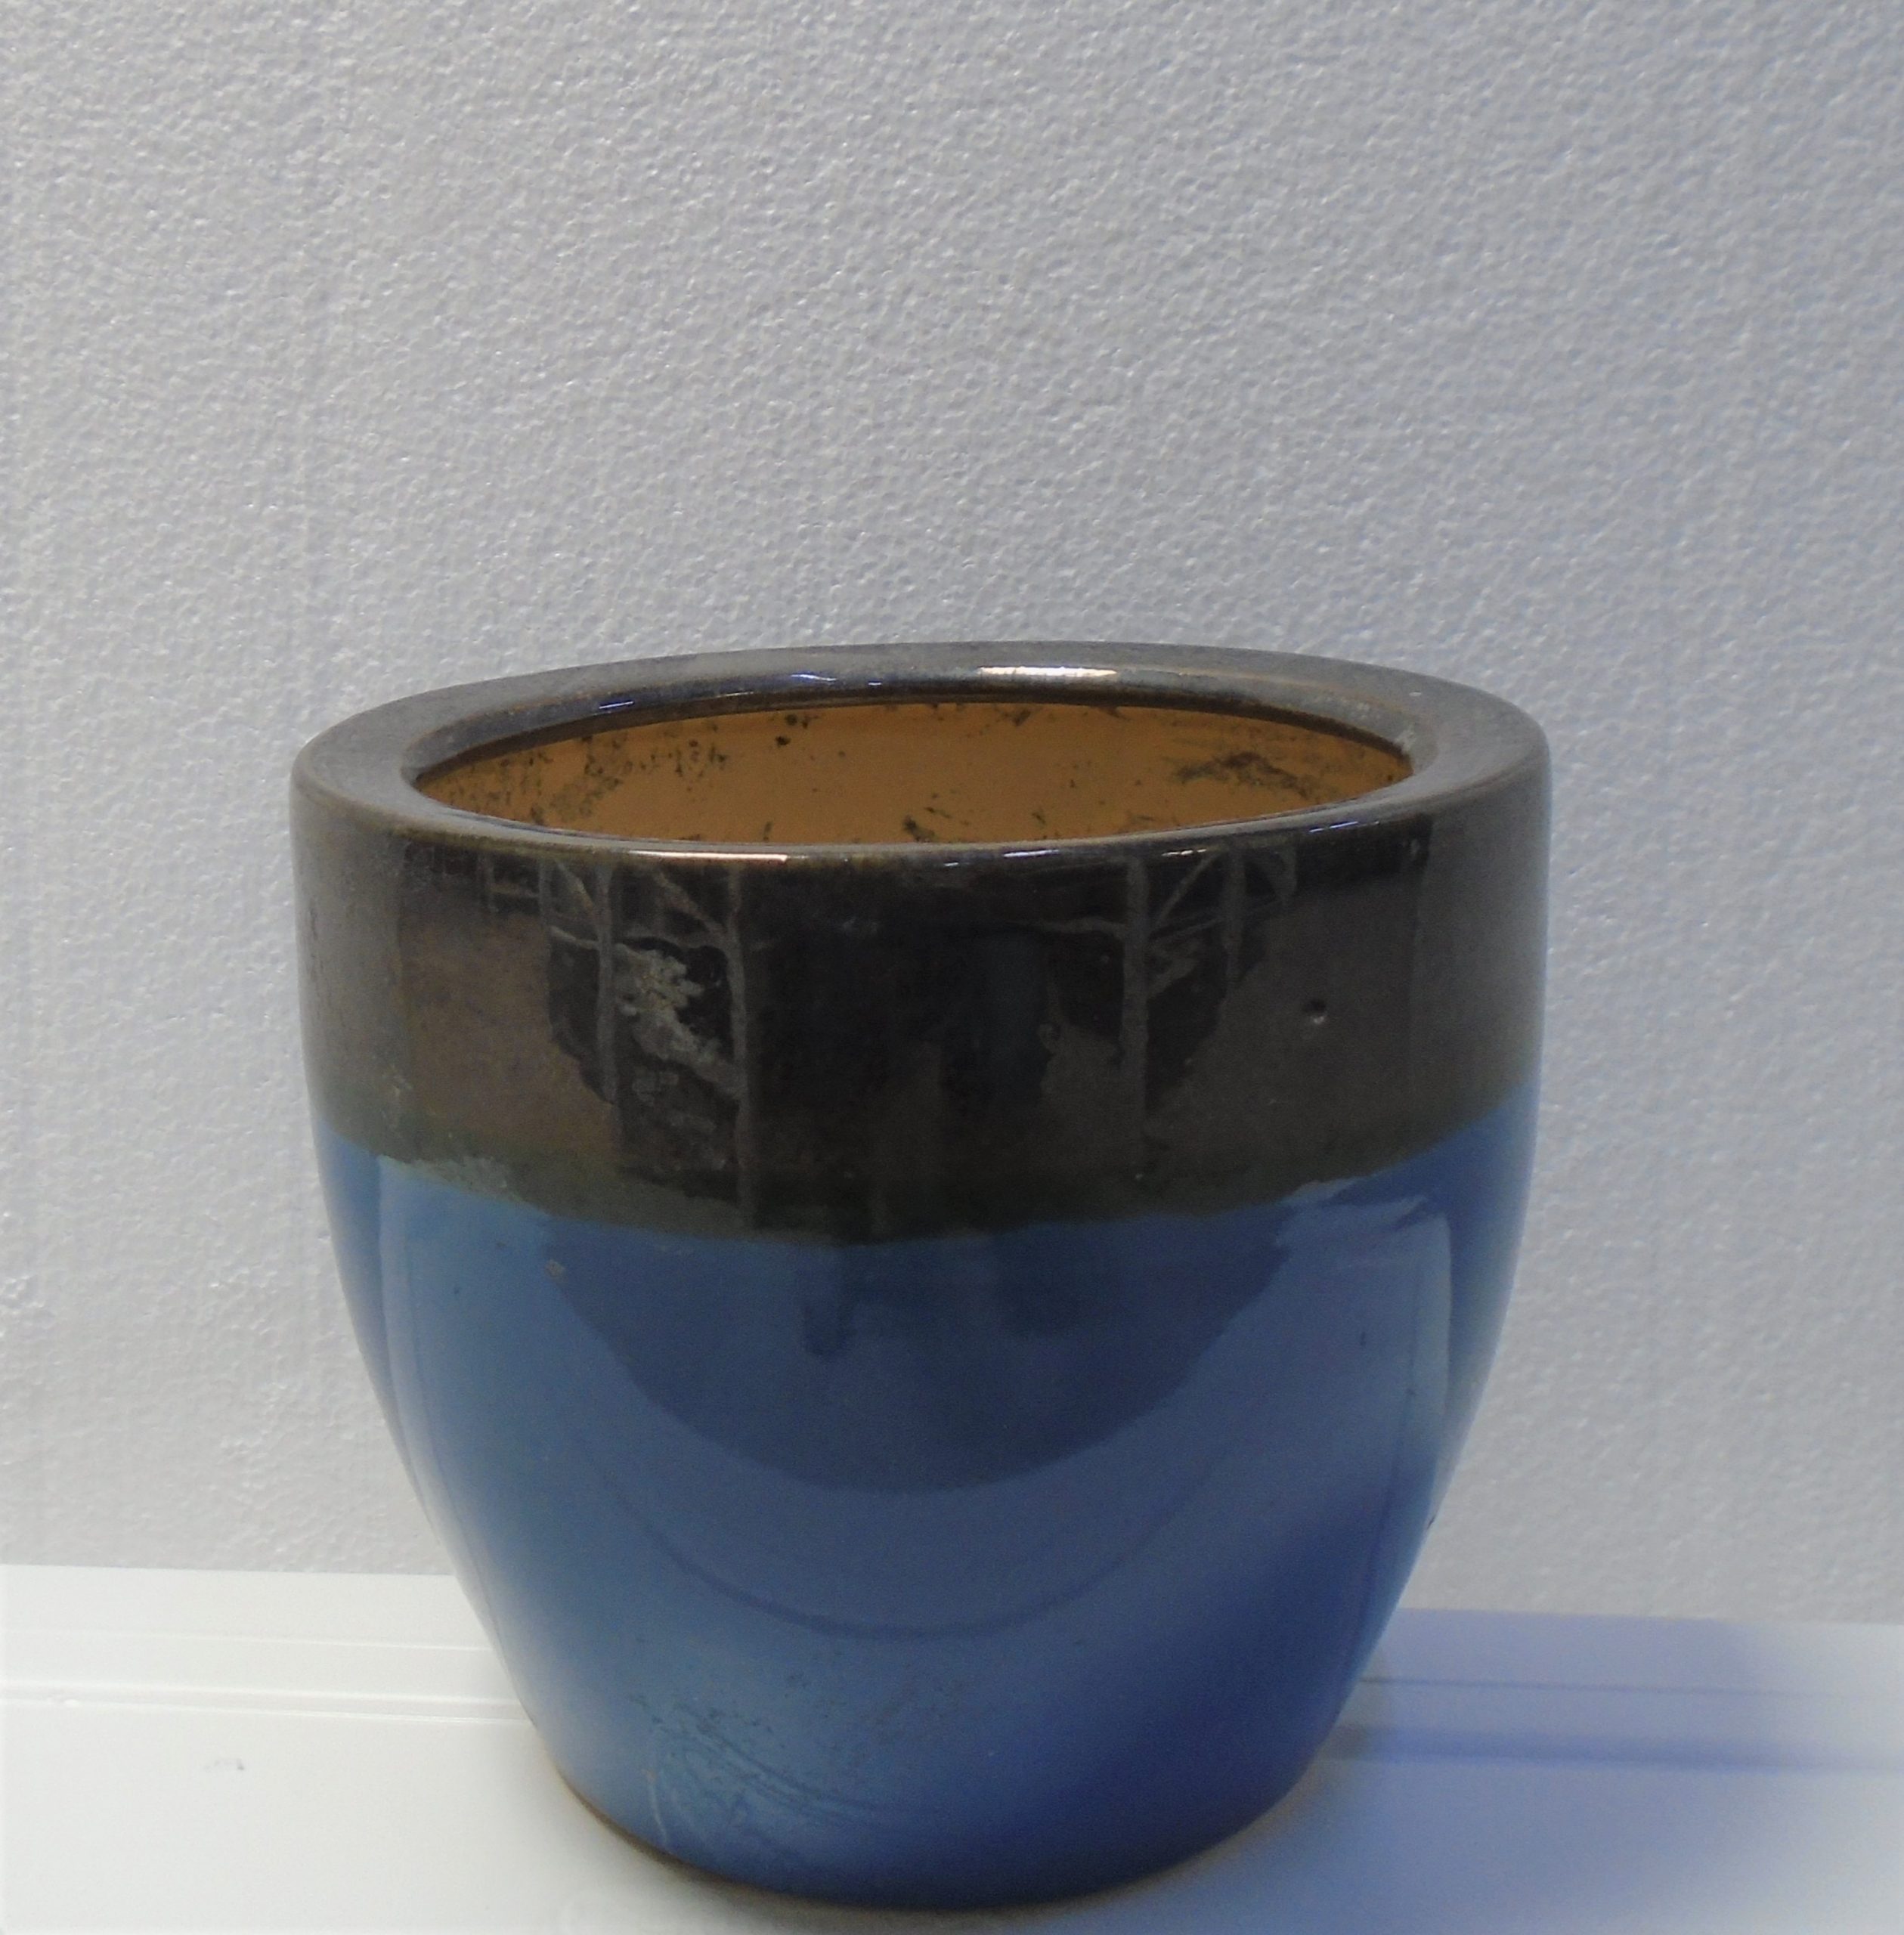 Buy Ceramic Coat Clay Pots Online on Qetaat.com